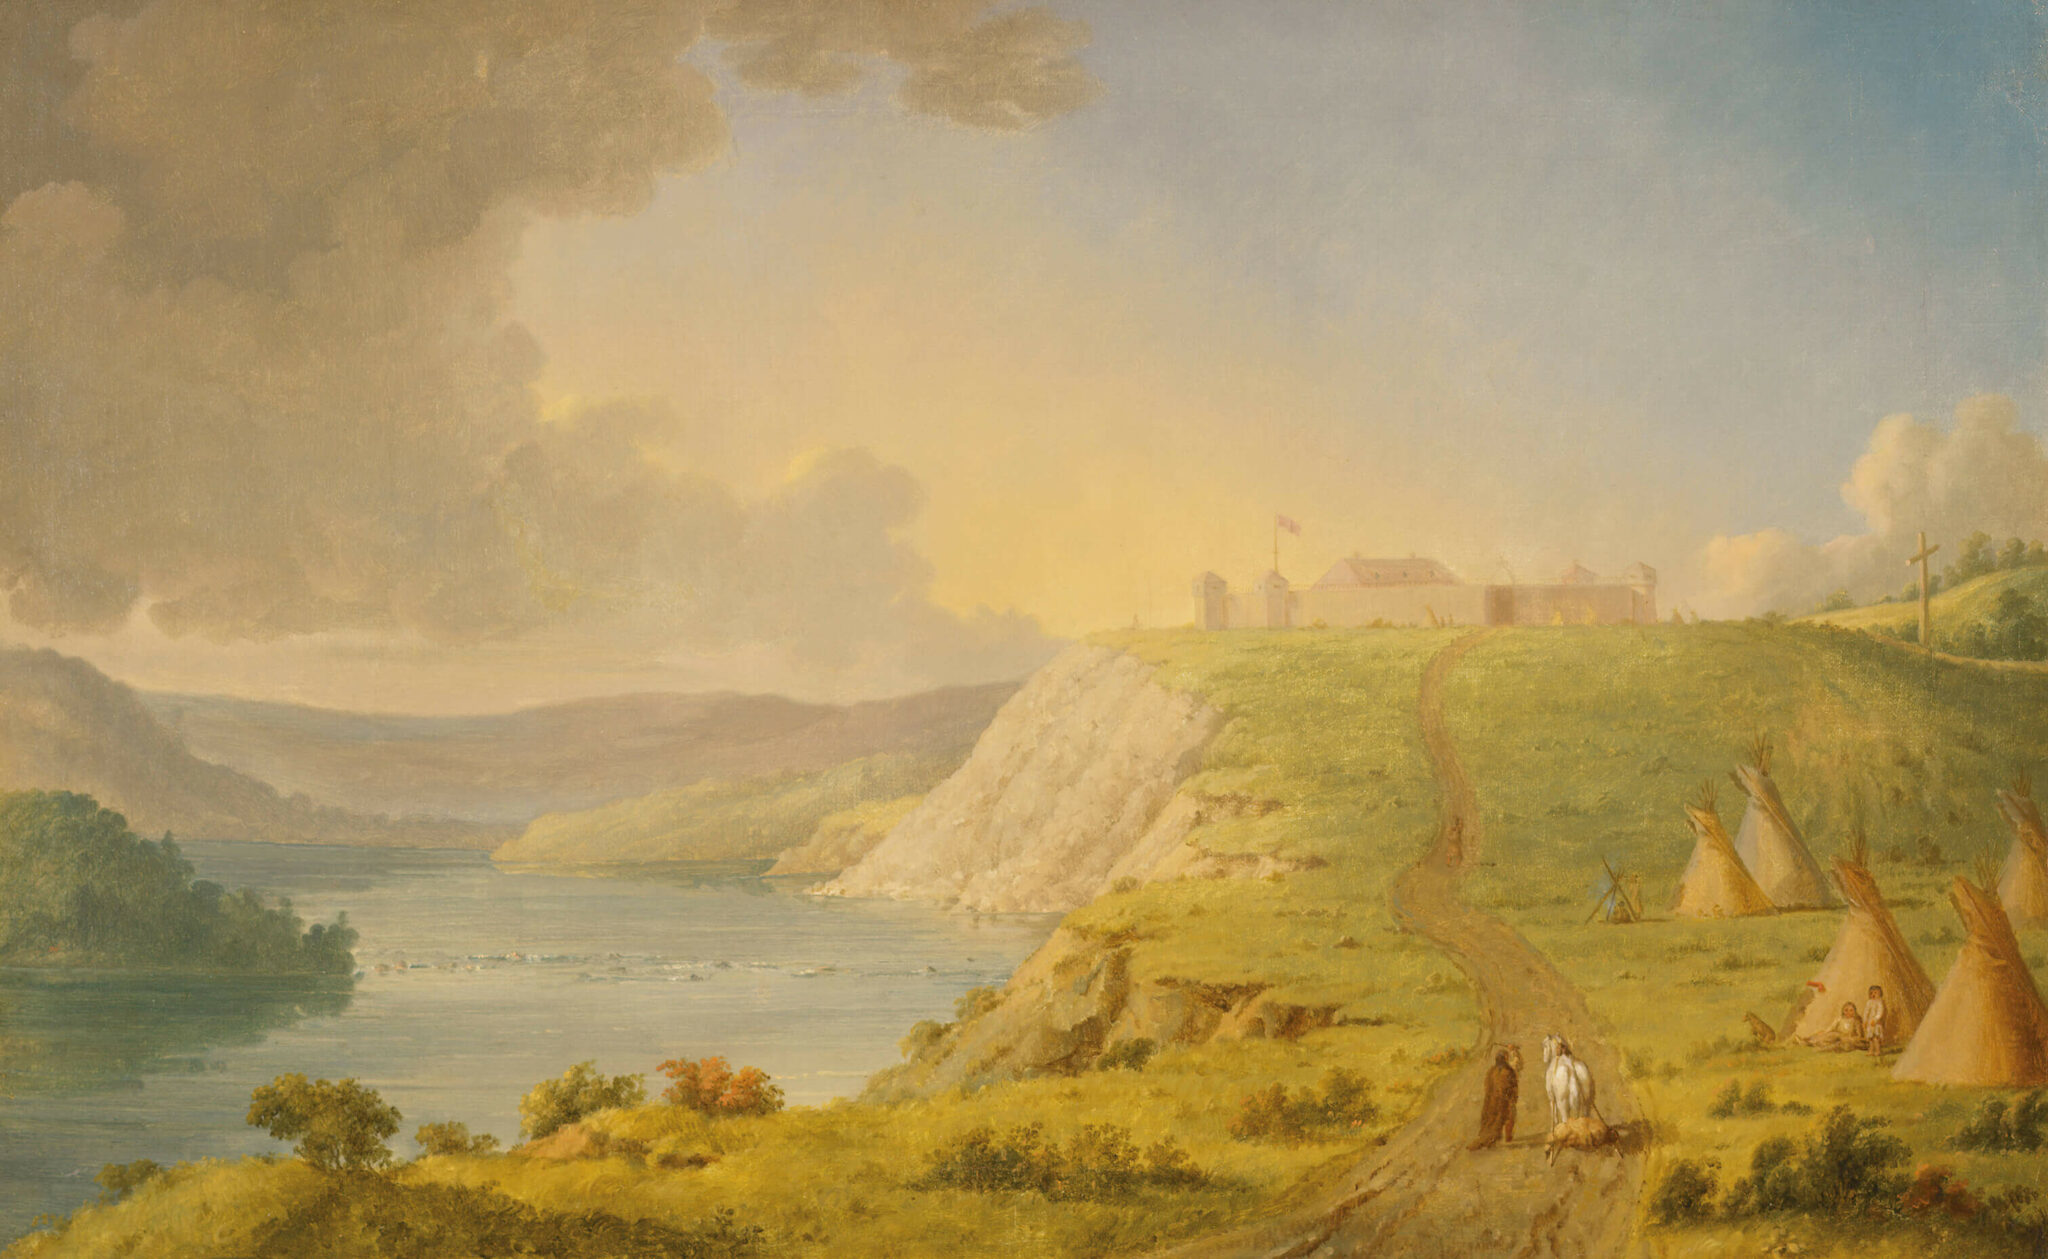 Paul Kane, Fort Edmonton, c. 1849–56